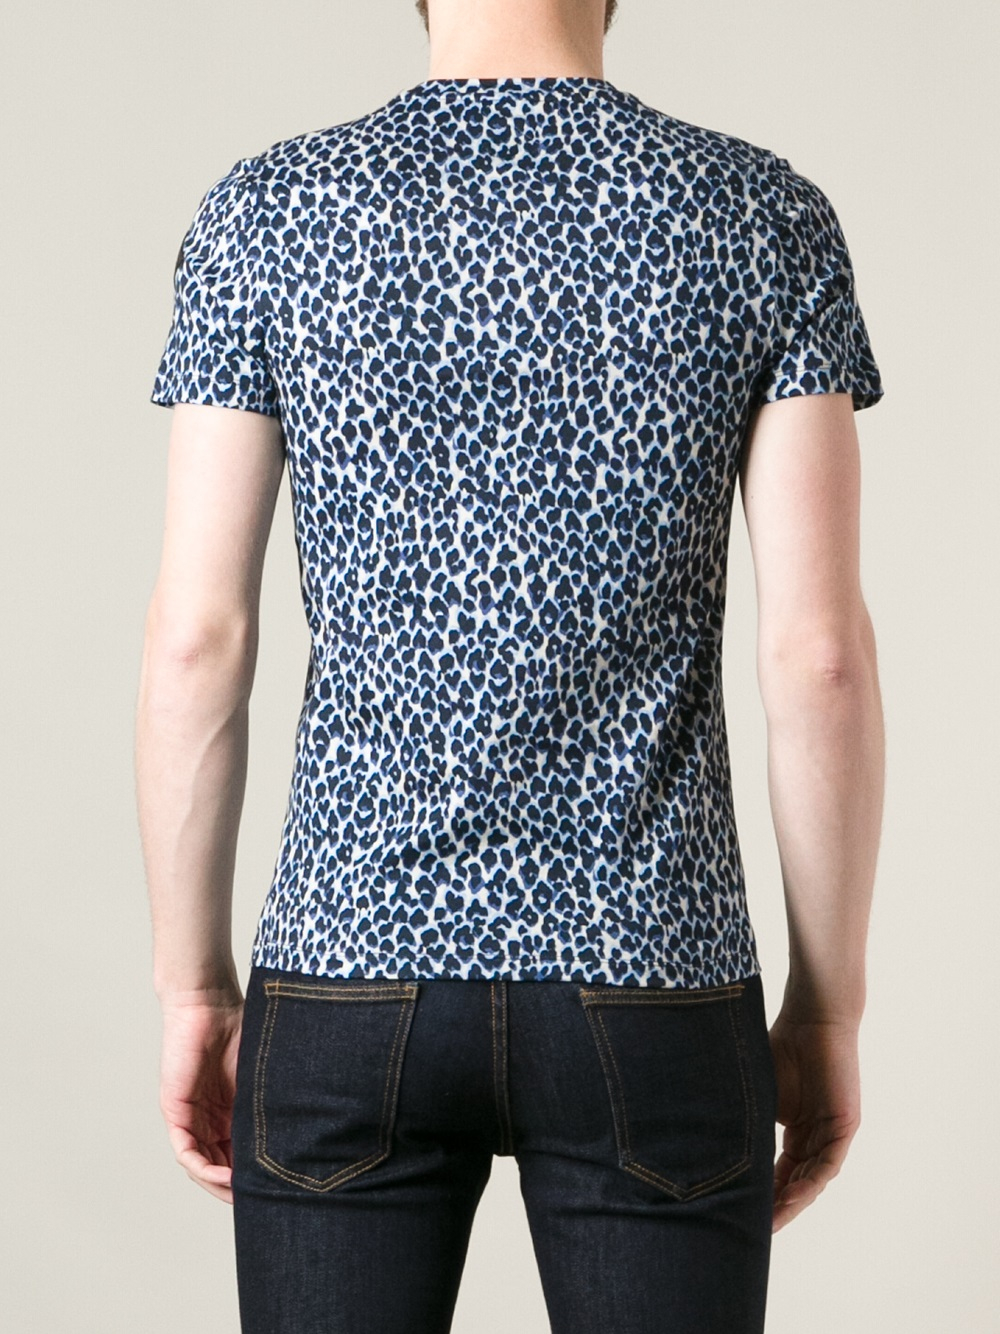 Moncler Leopard Print T-Shirt in Blue for Men - Lyst